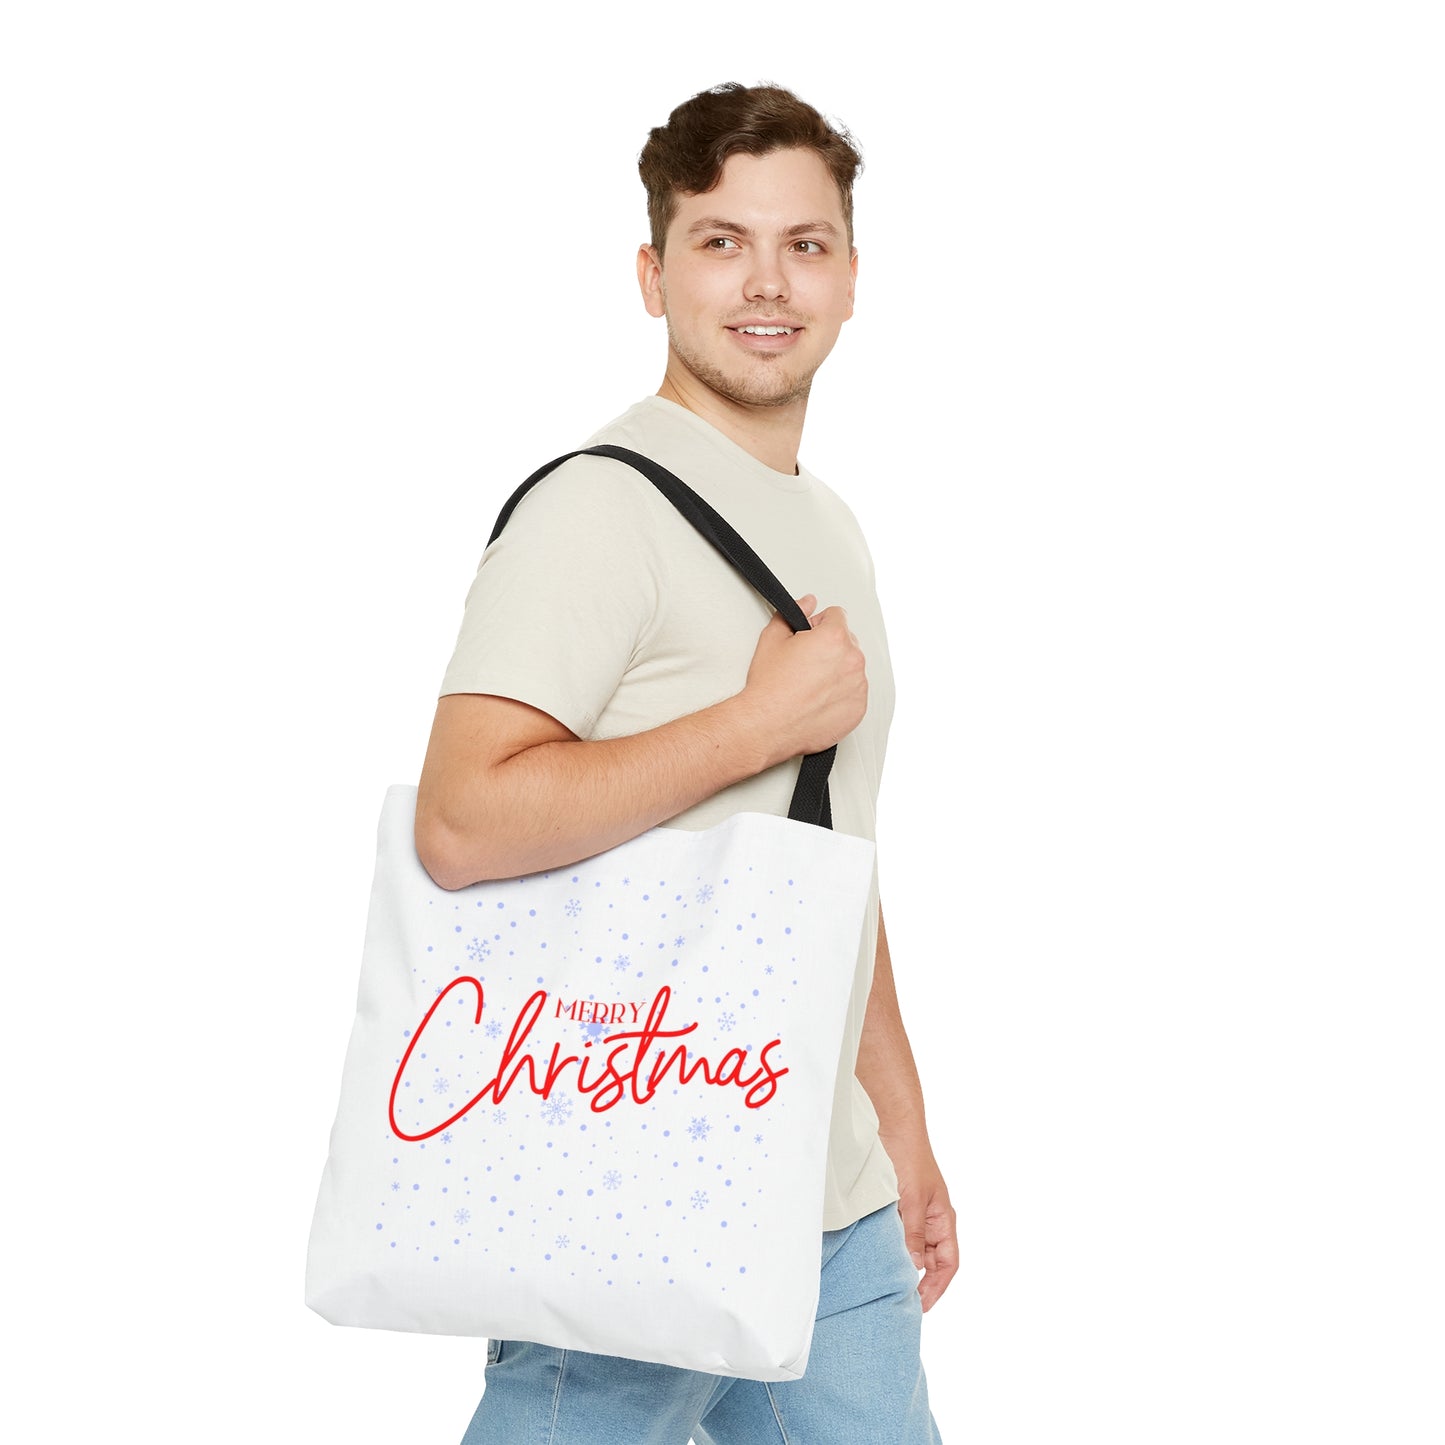 Merry Christmas Printed Tote Bags, Reusable Tote Bags